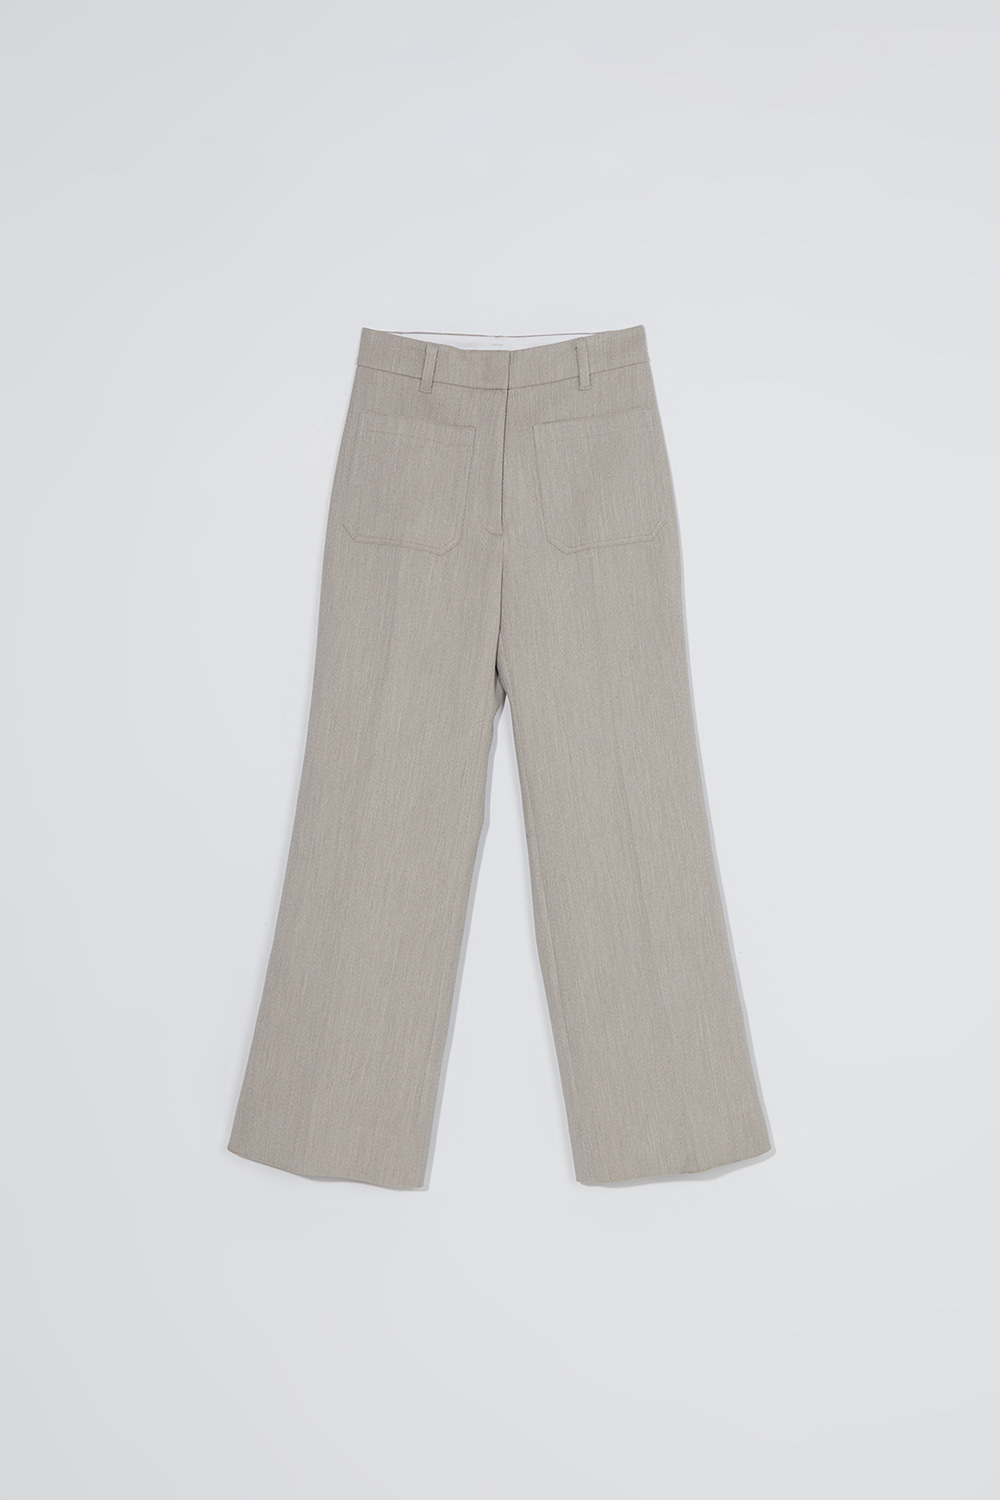 (Best Product)Pocket detail pants_grey